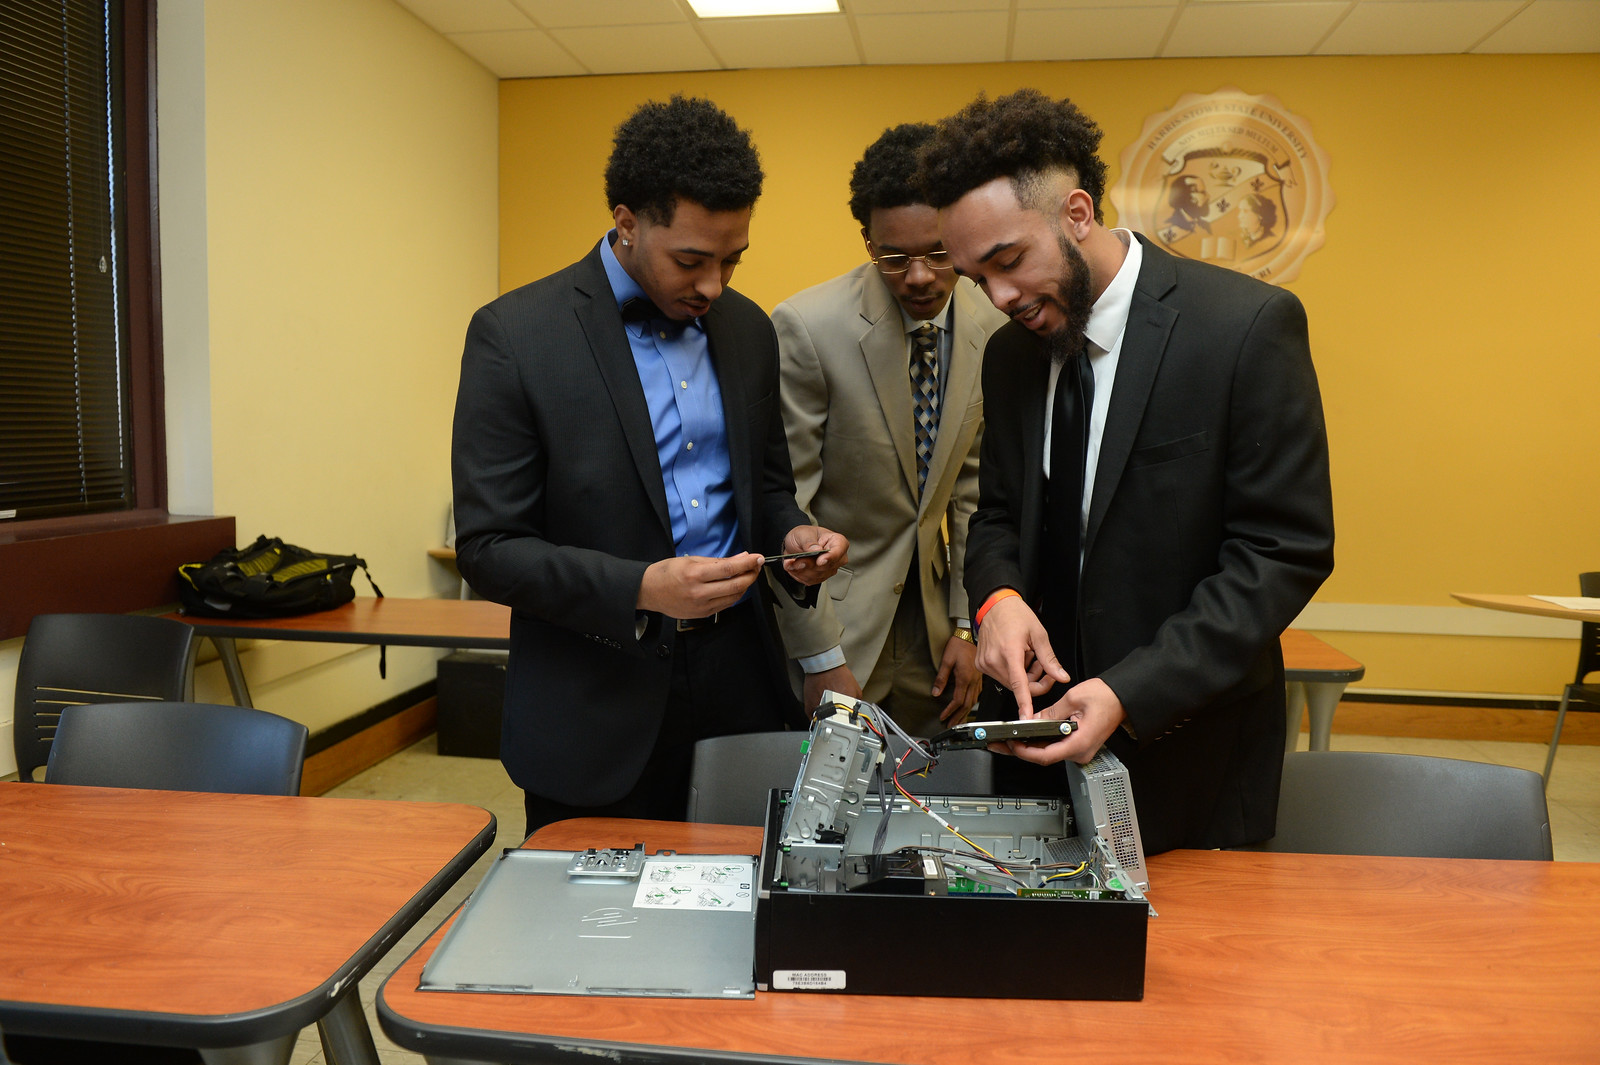 NPower St. Louis students assembling a computer